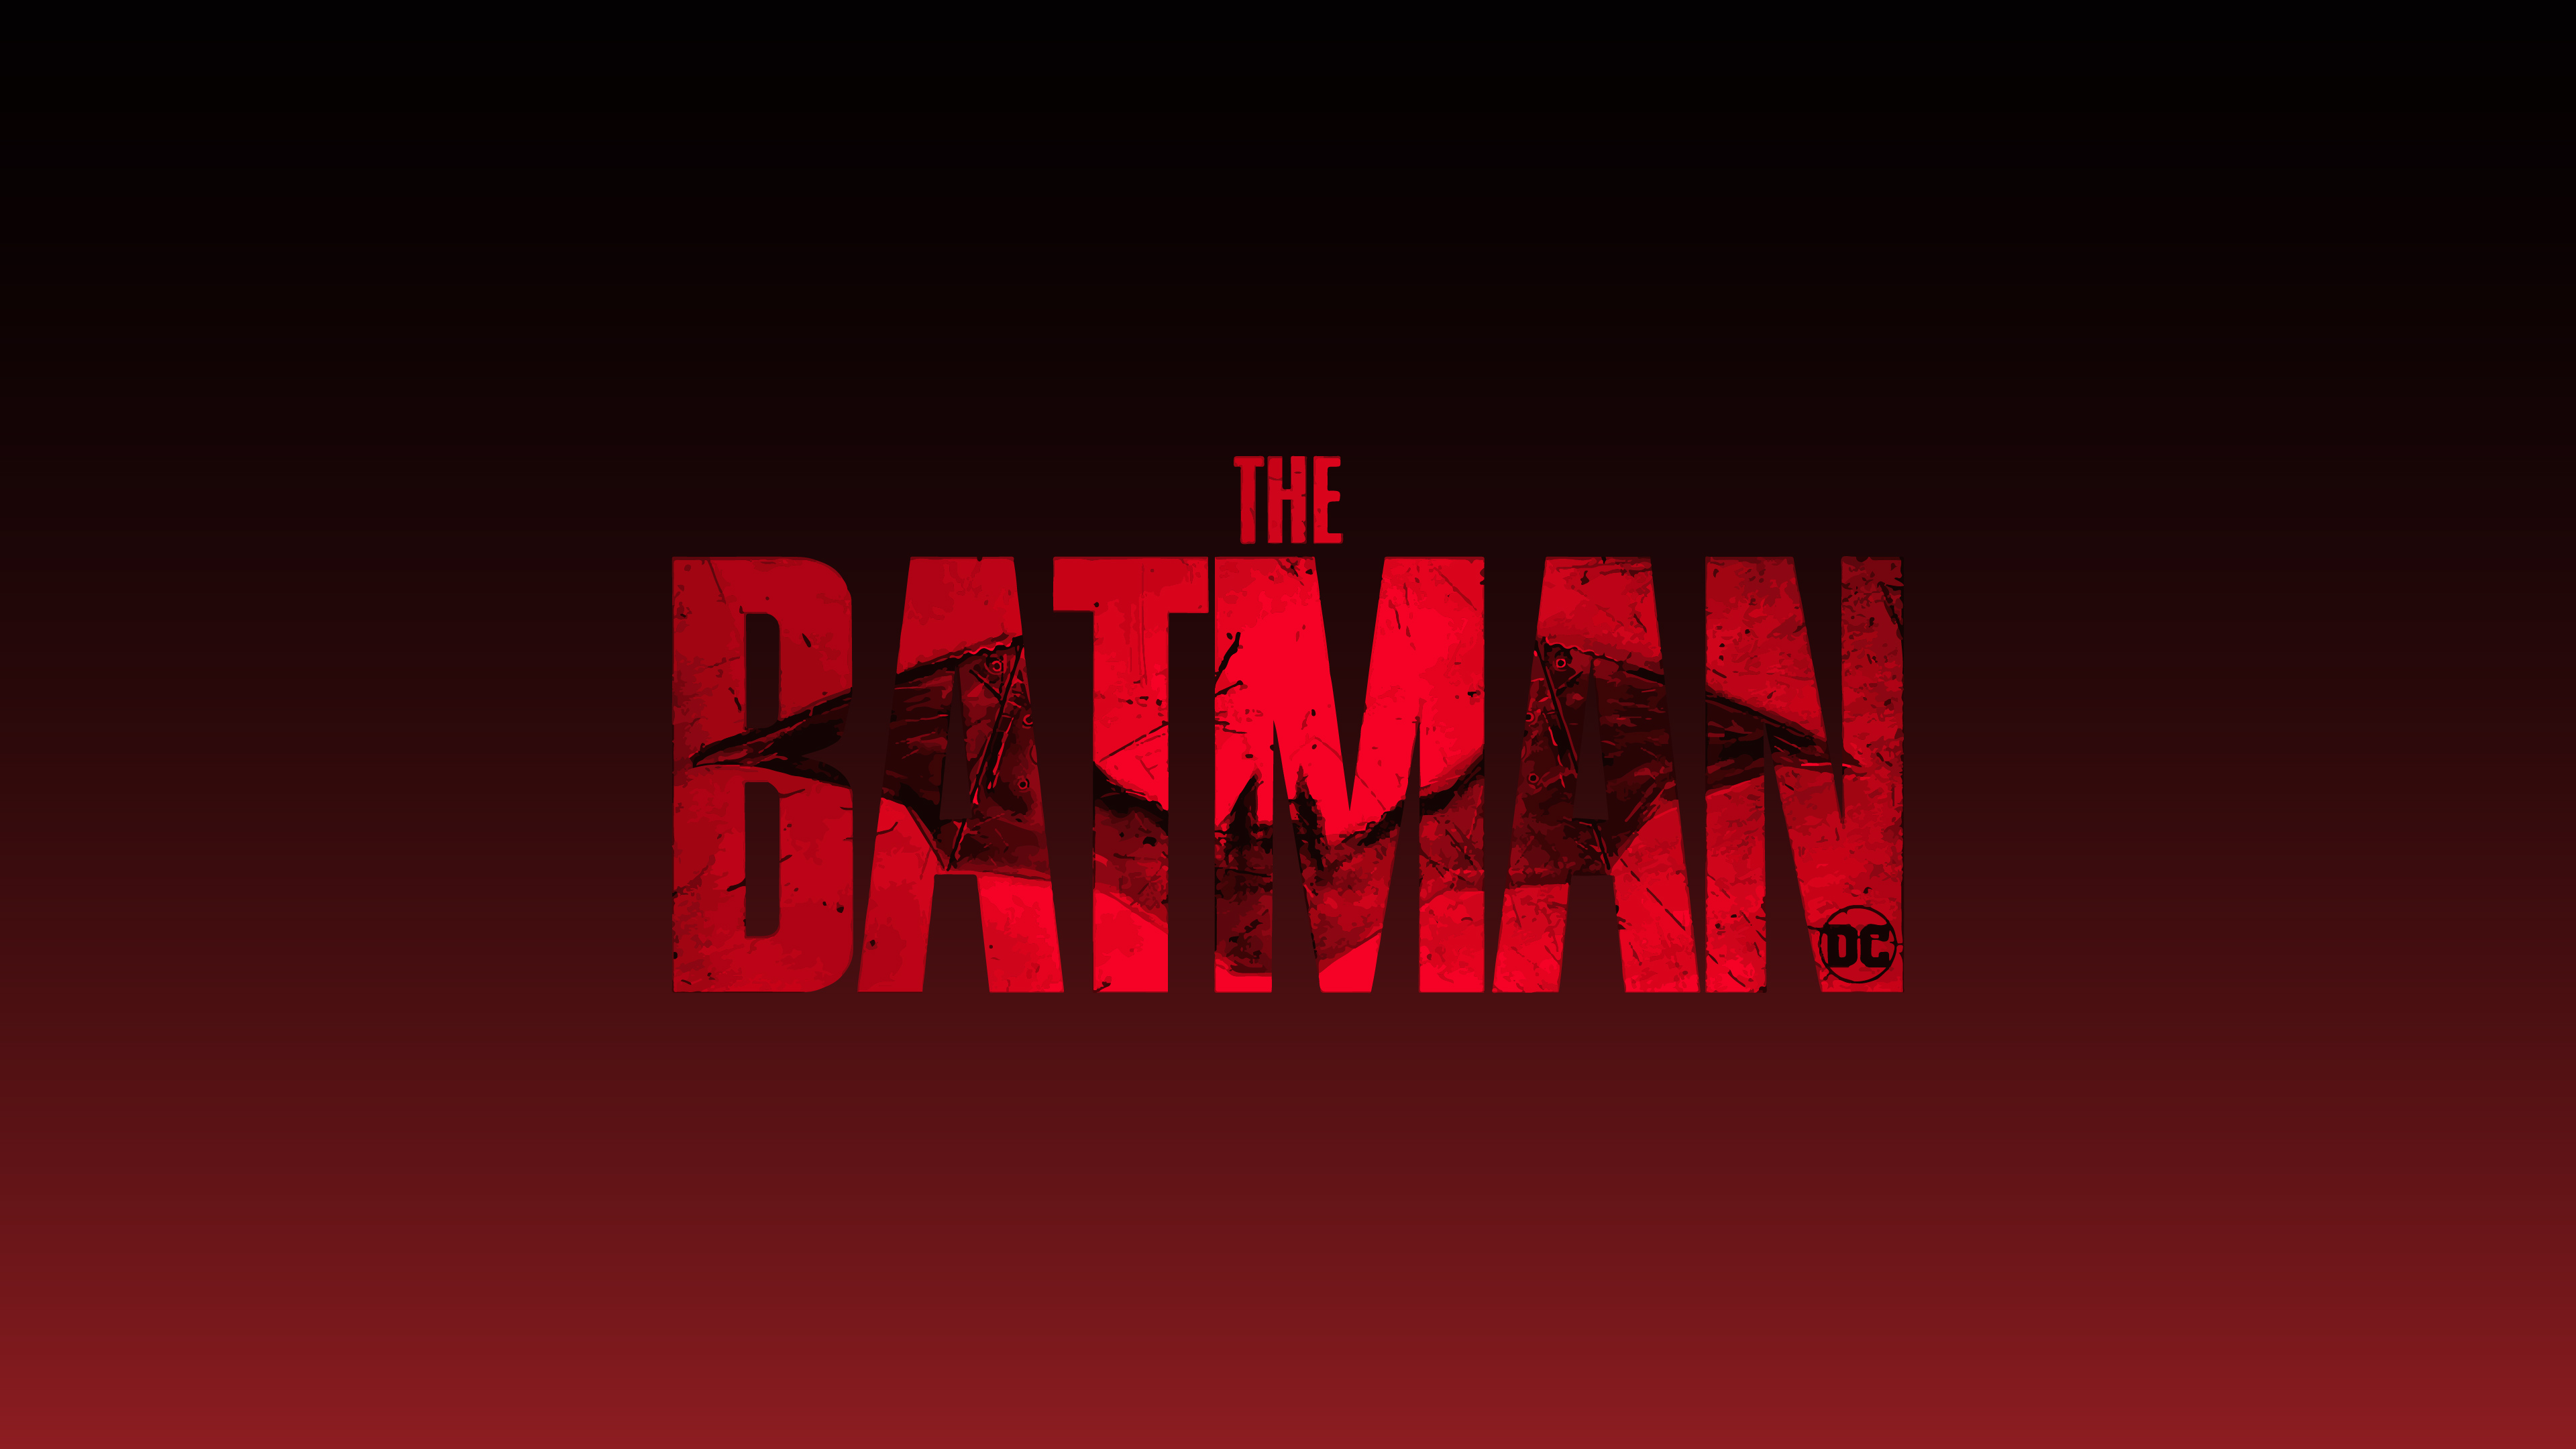 The Batman 2020 Logo 4k The Batman 2020 Logo 4k wallpapers